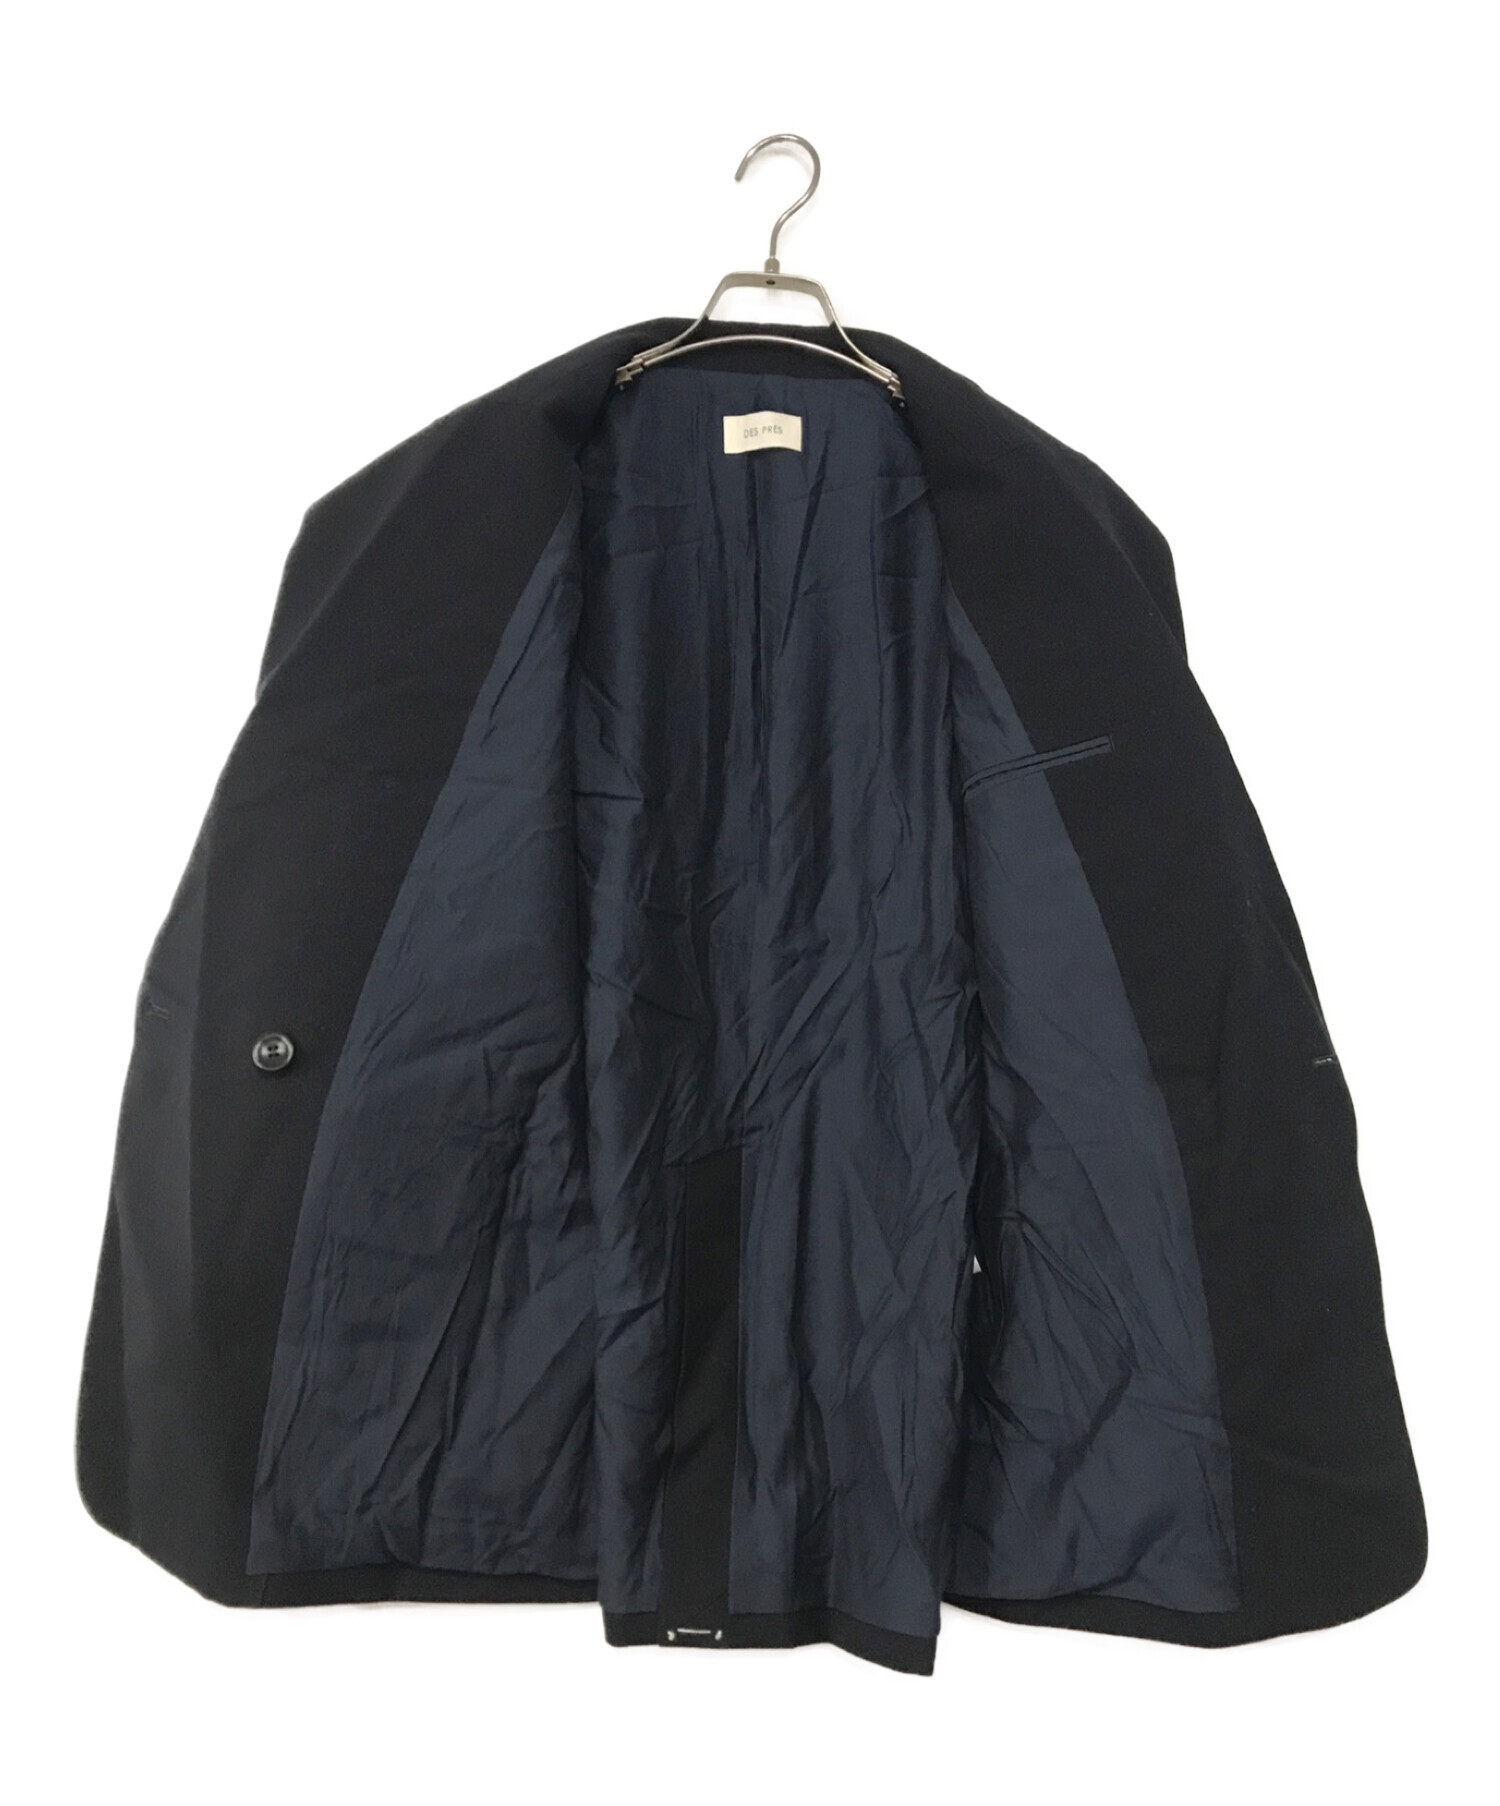 DES PRES (デ プレ) ハードウールオックスフォードダブルブレストジャケット ネイビー サイズ:F